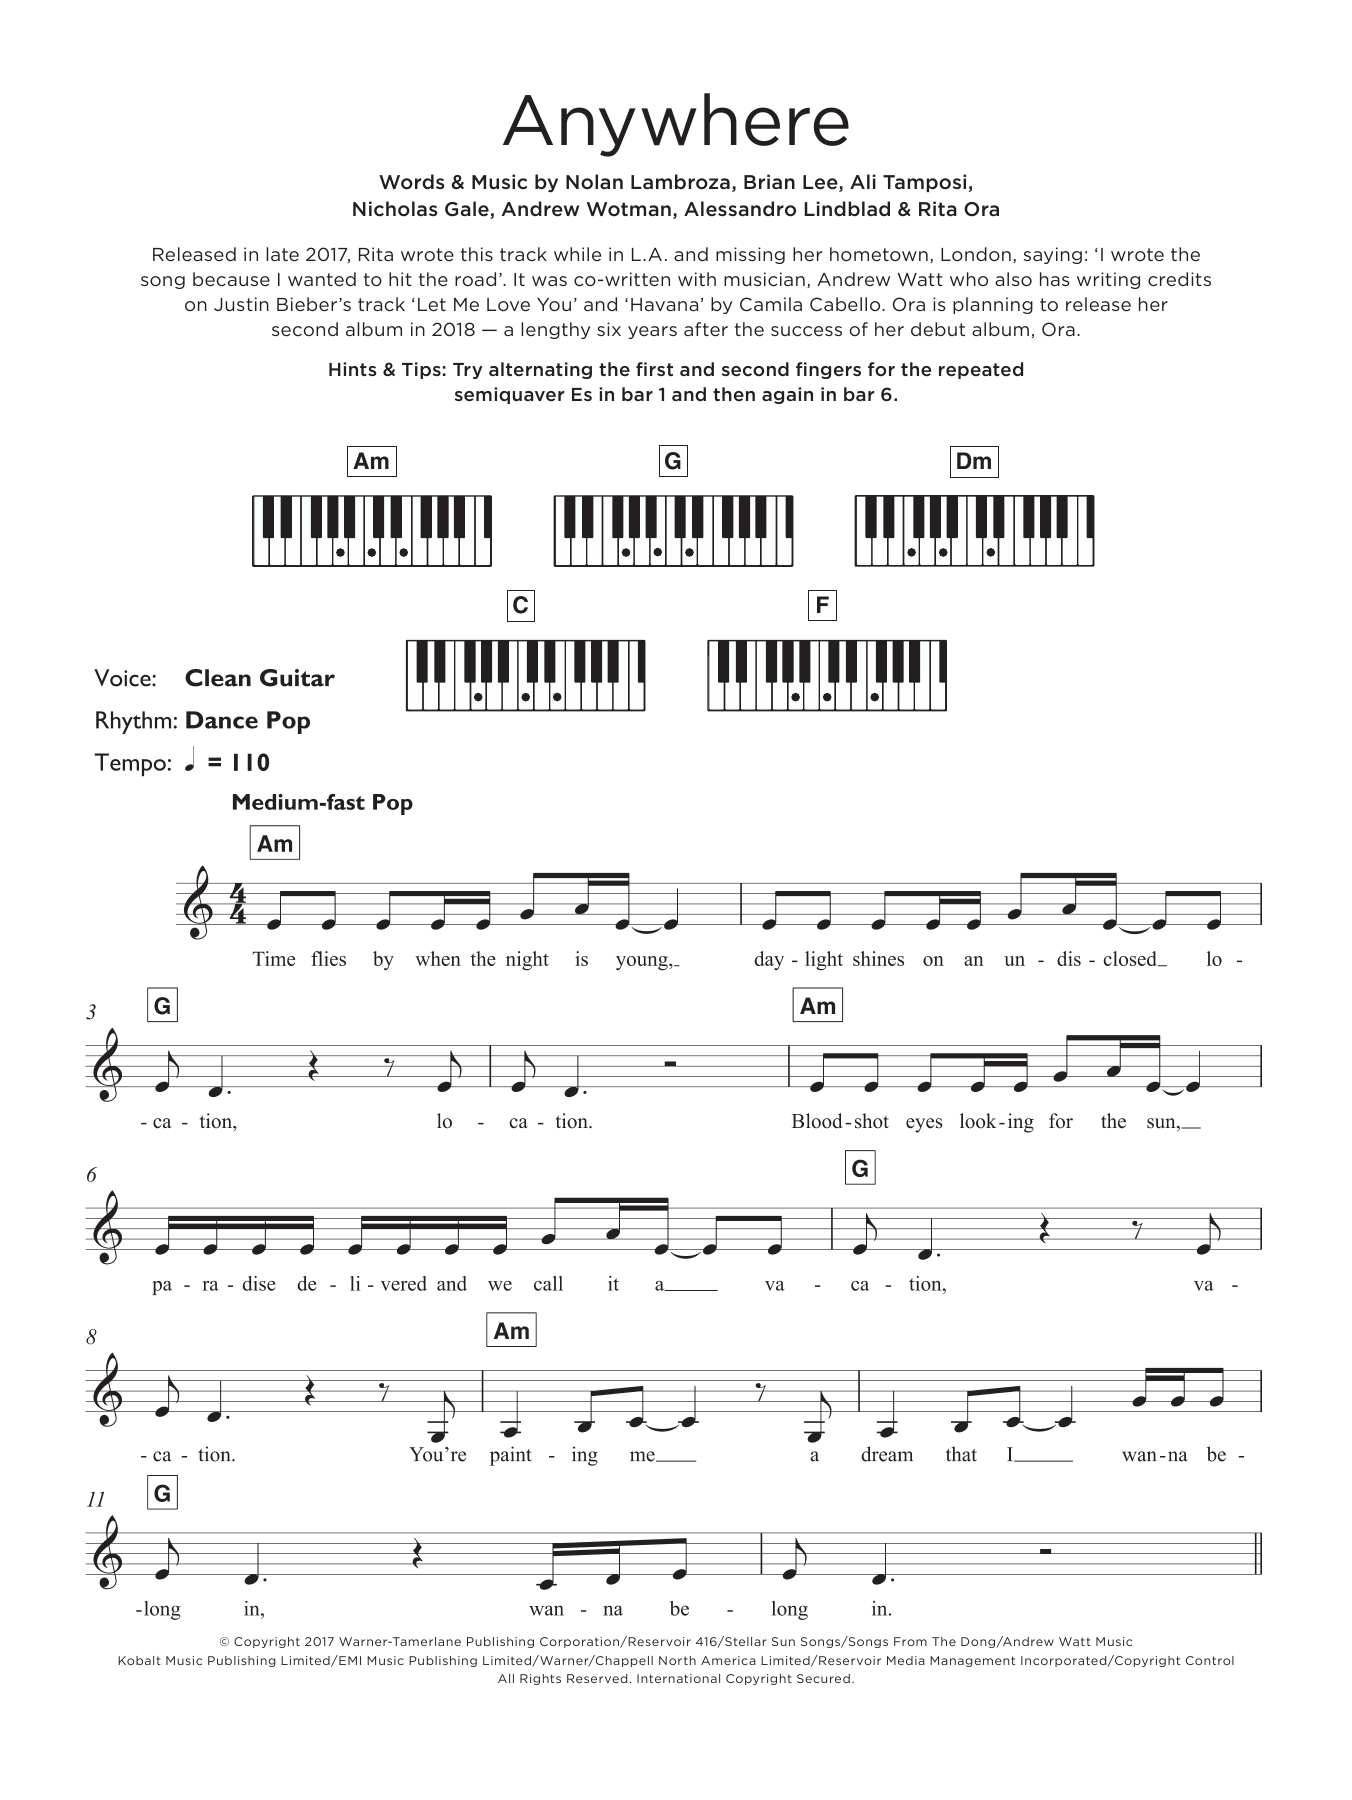 Rita Ora Anywhere Sheet Music Notes & Chords for Beginner Piano - Download or Print PDF